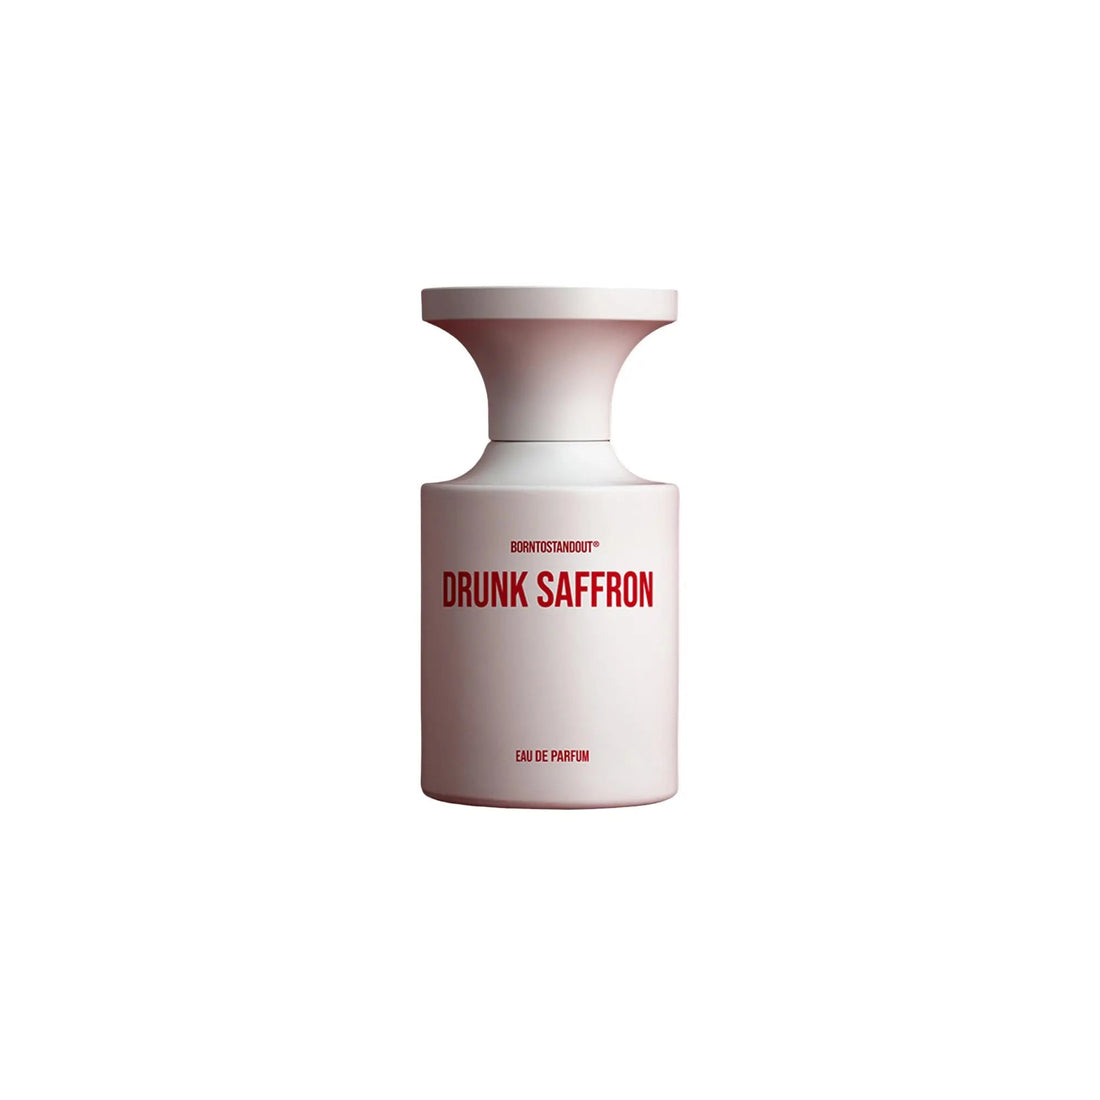 Born to stand out Drunk Saffron - 50 ml